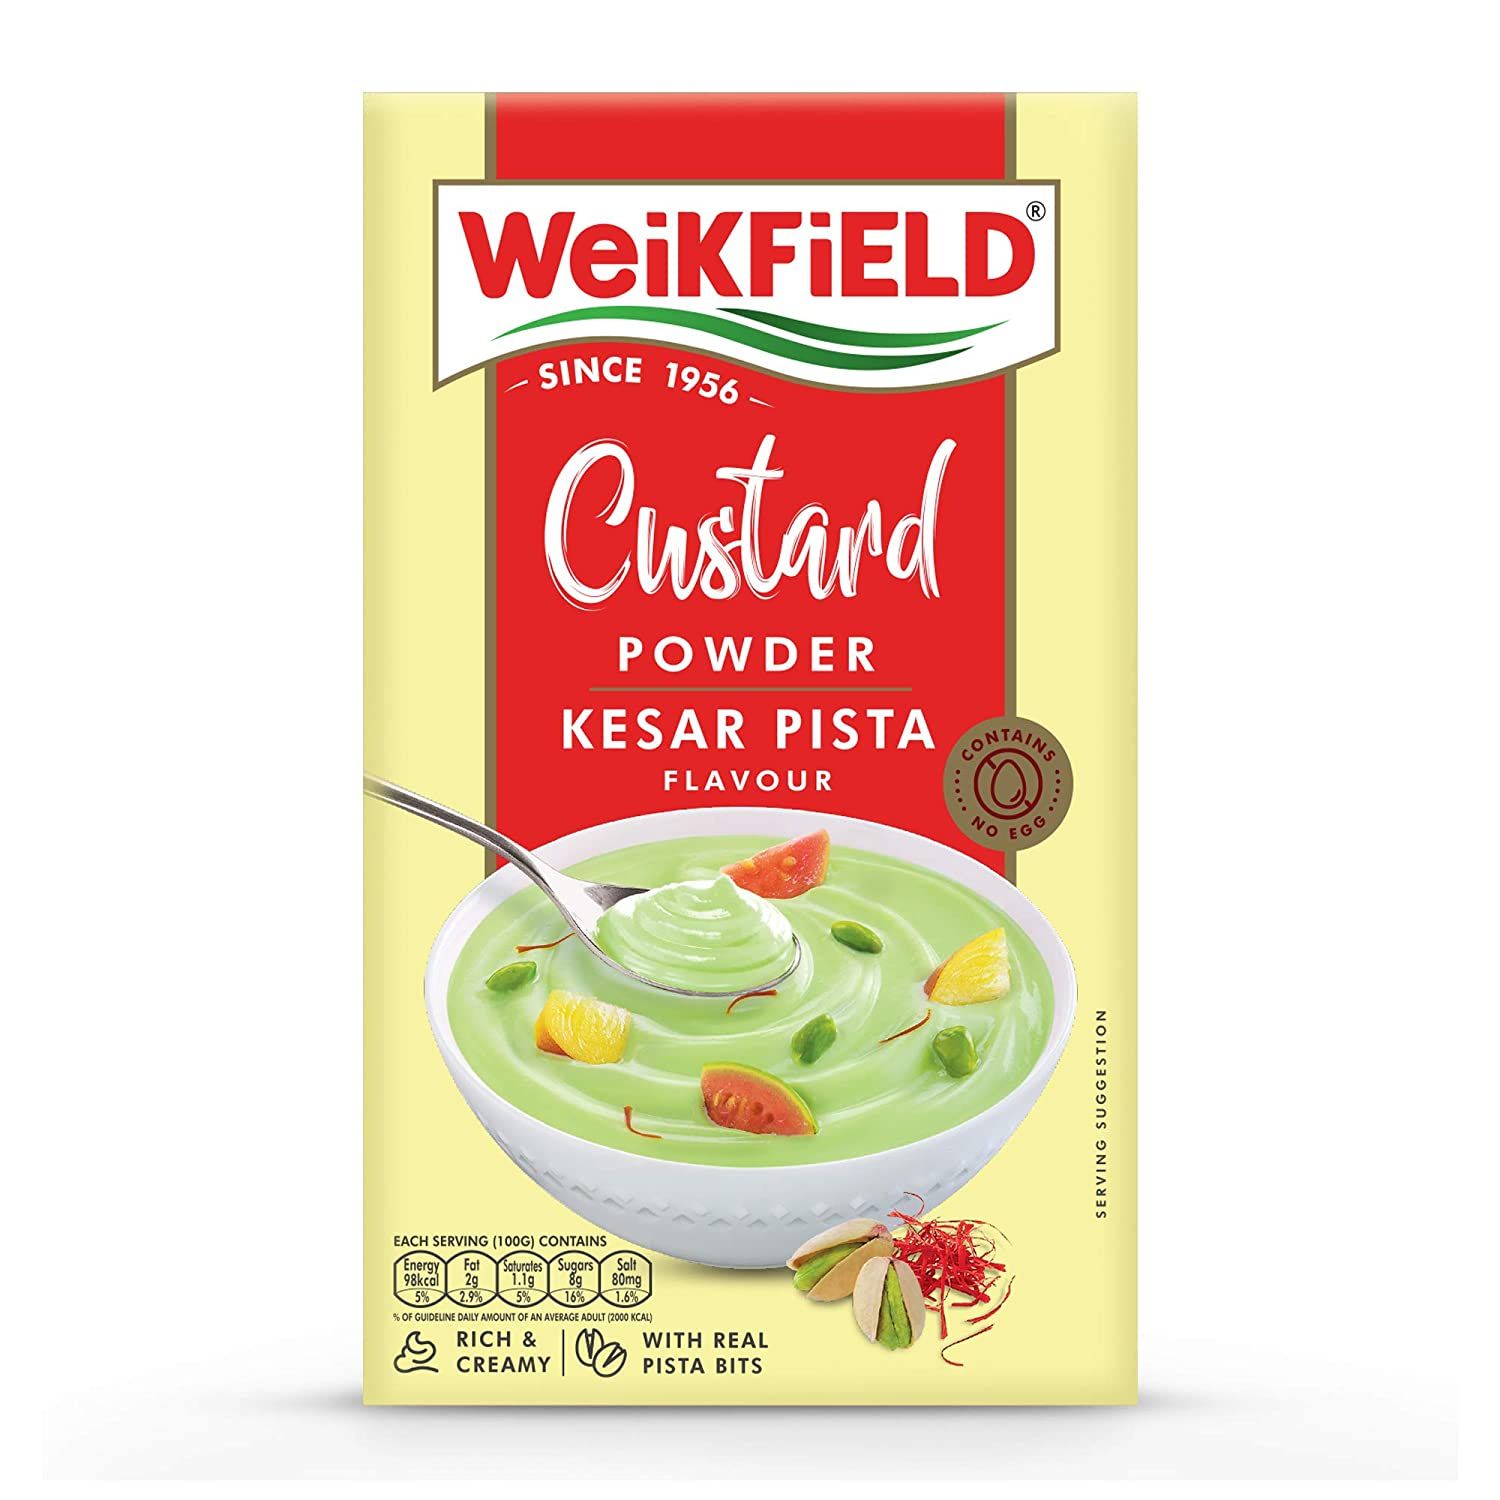 Weikfield Kesar Pista Custard Powder Image